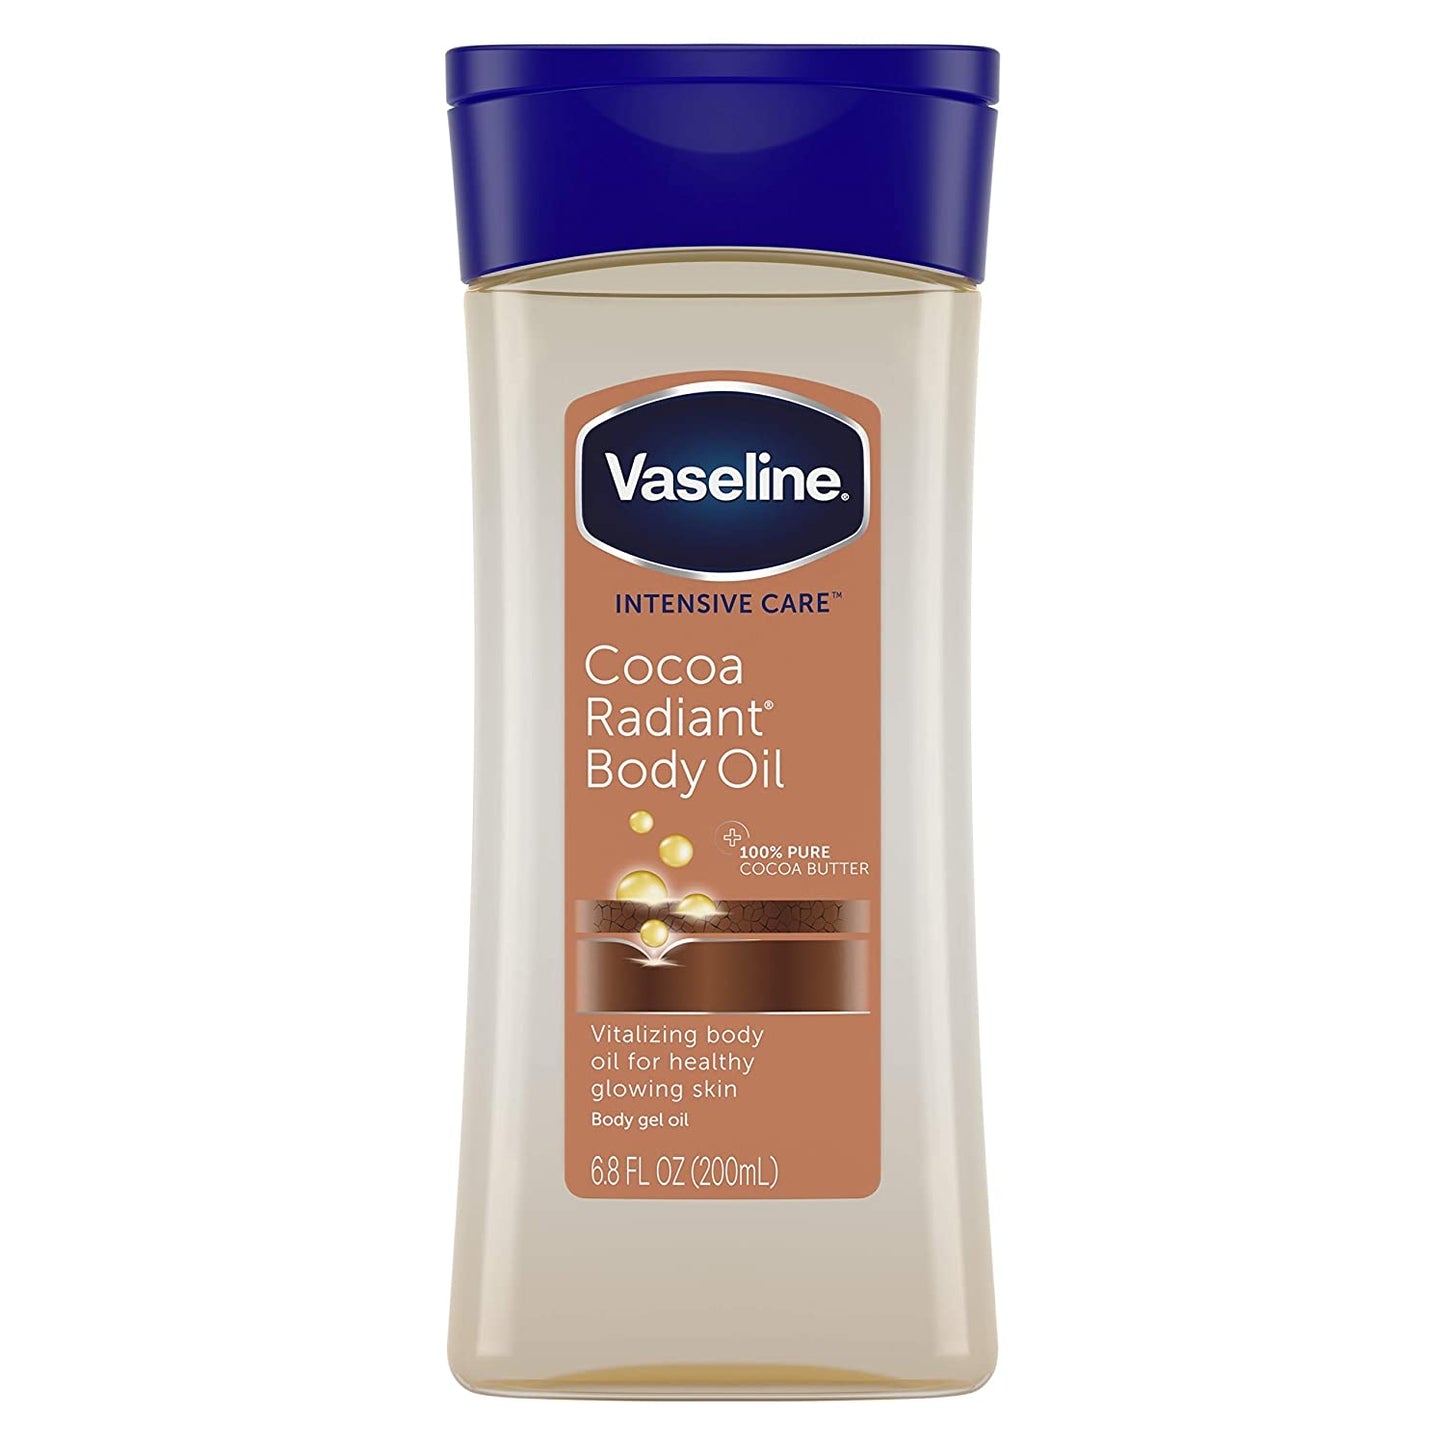 Vaseline Coco Radiant Body Oil,Intensive Care, 100% Cocoa Butter,200ML Blue Top